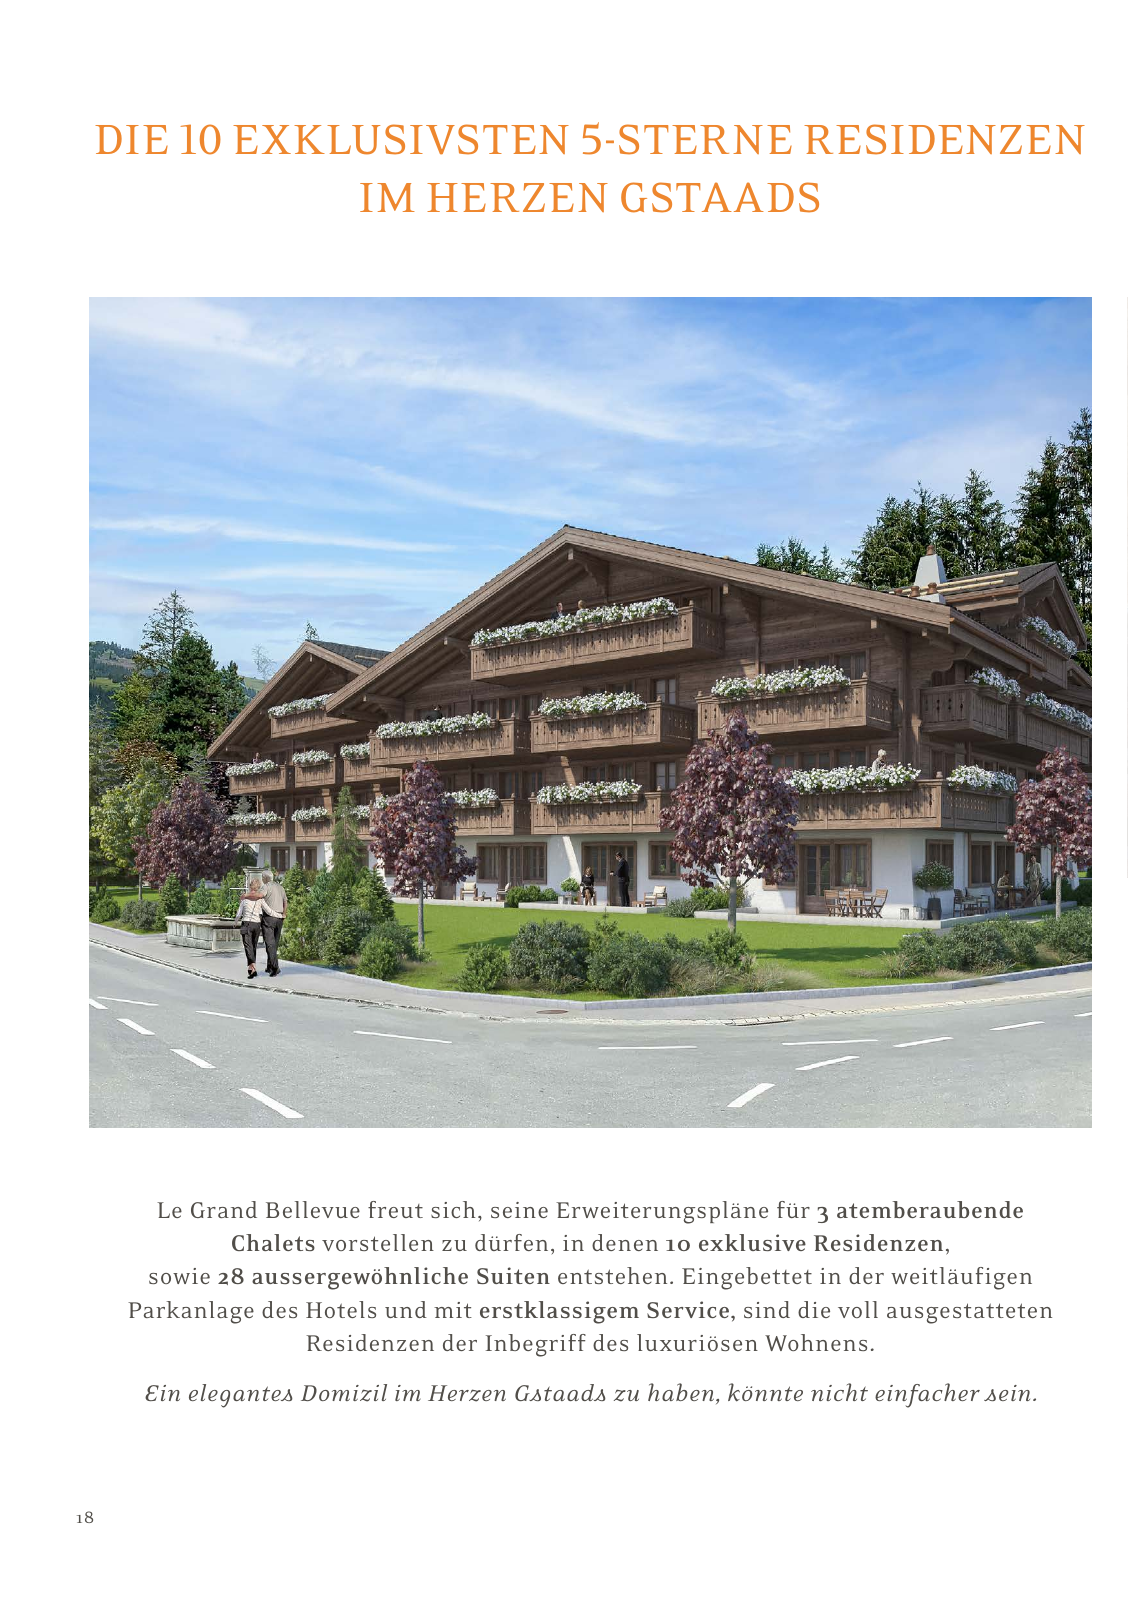 Vorschau Le Grand Bellevue Winter 2020/21 DE Seite 18